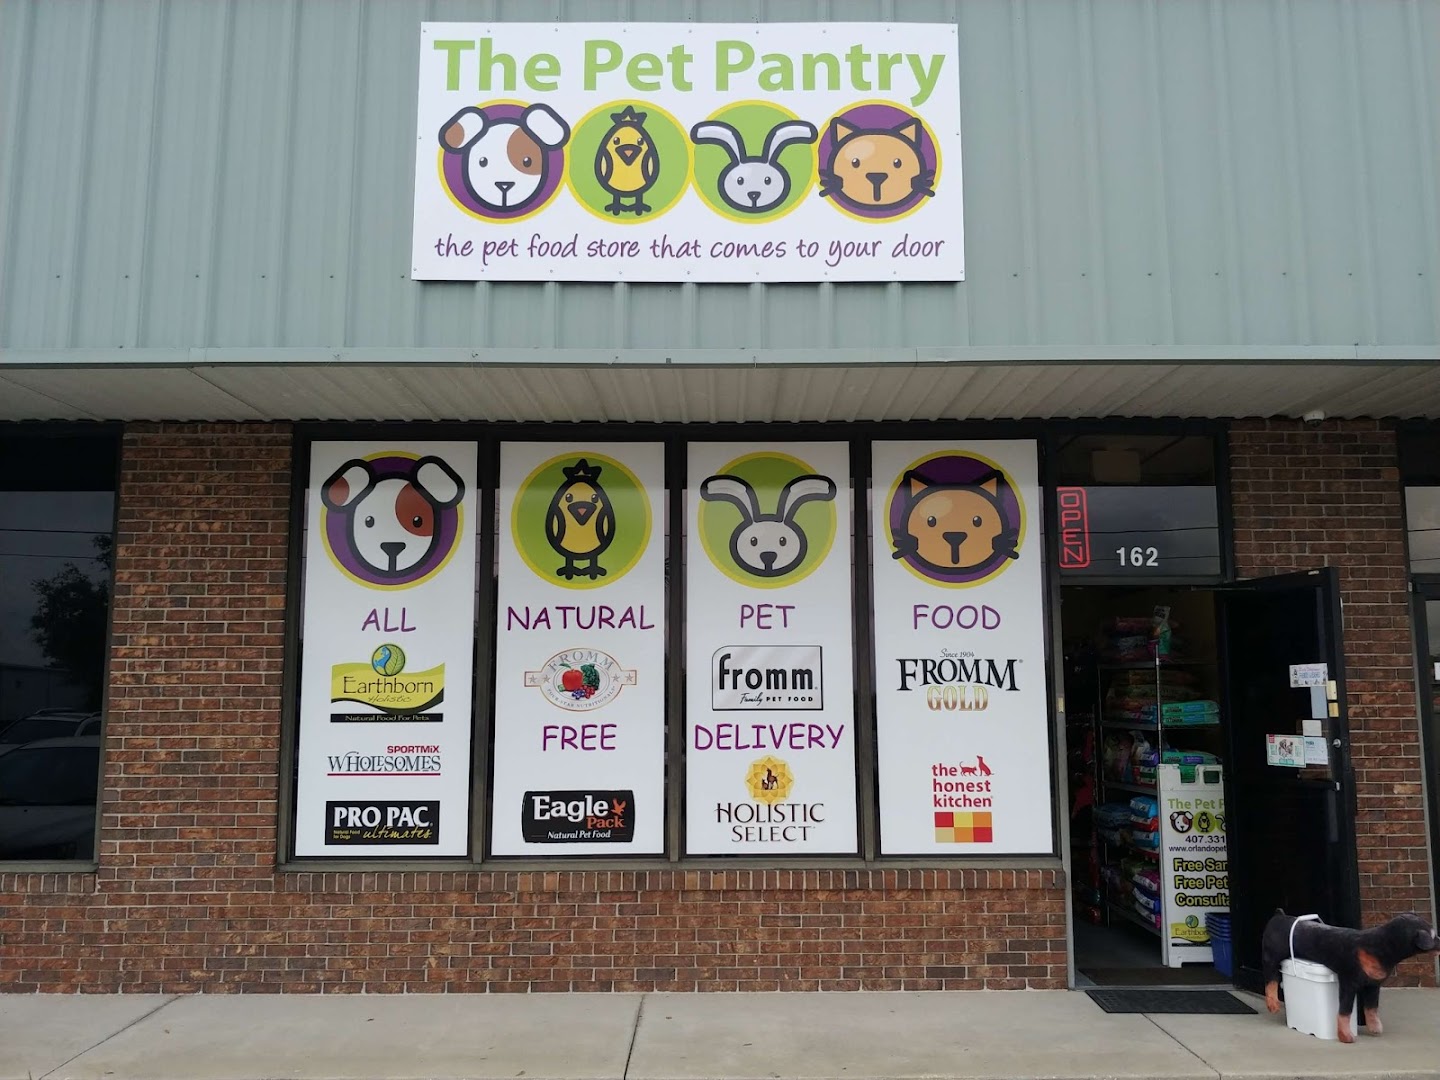 The Pet Pantry